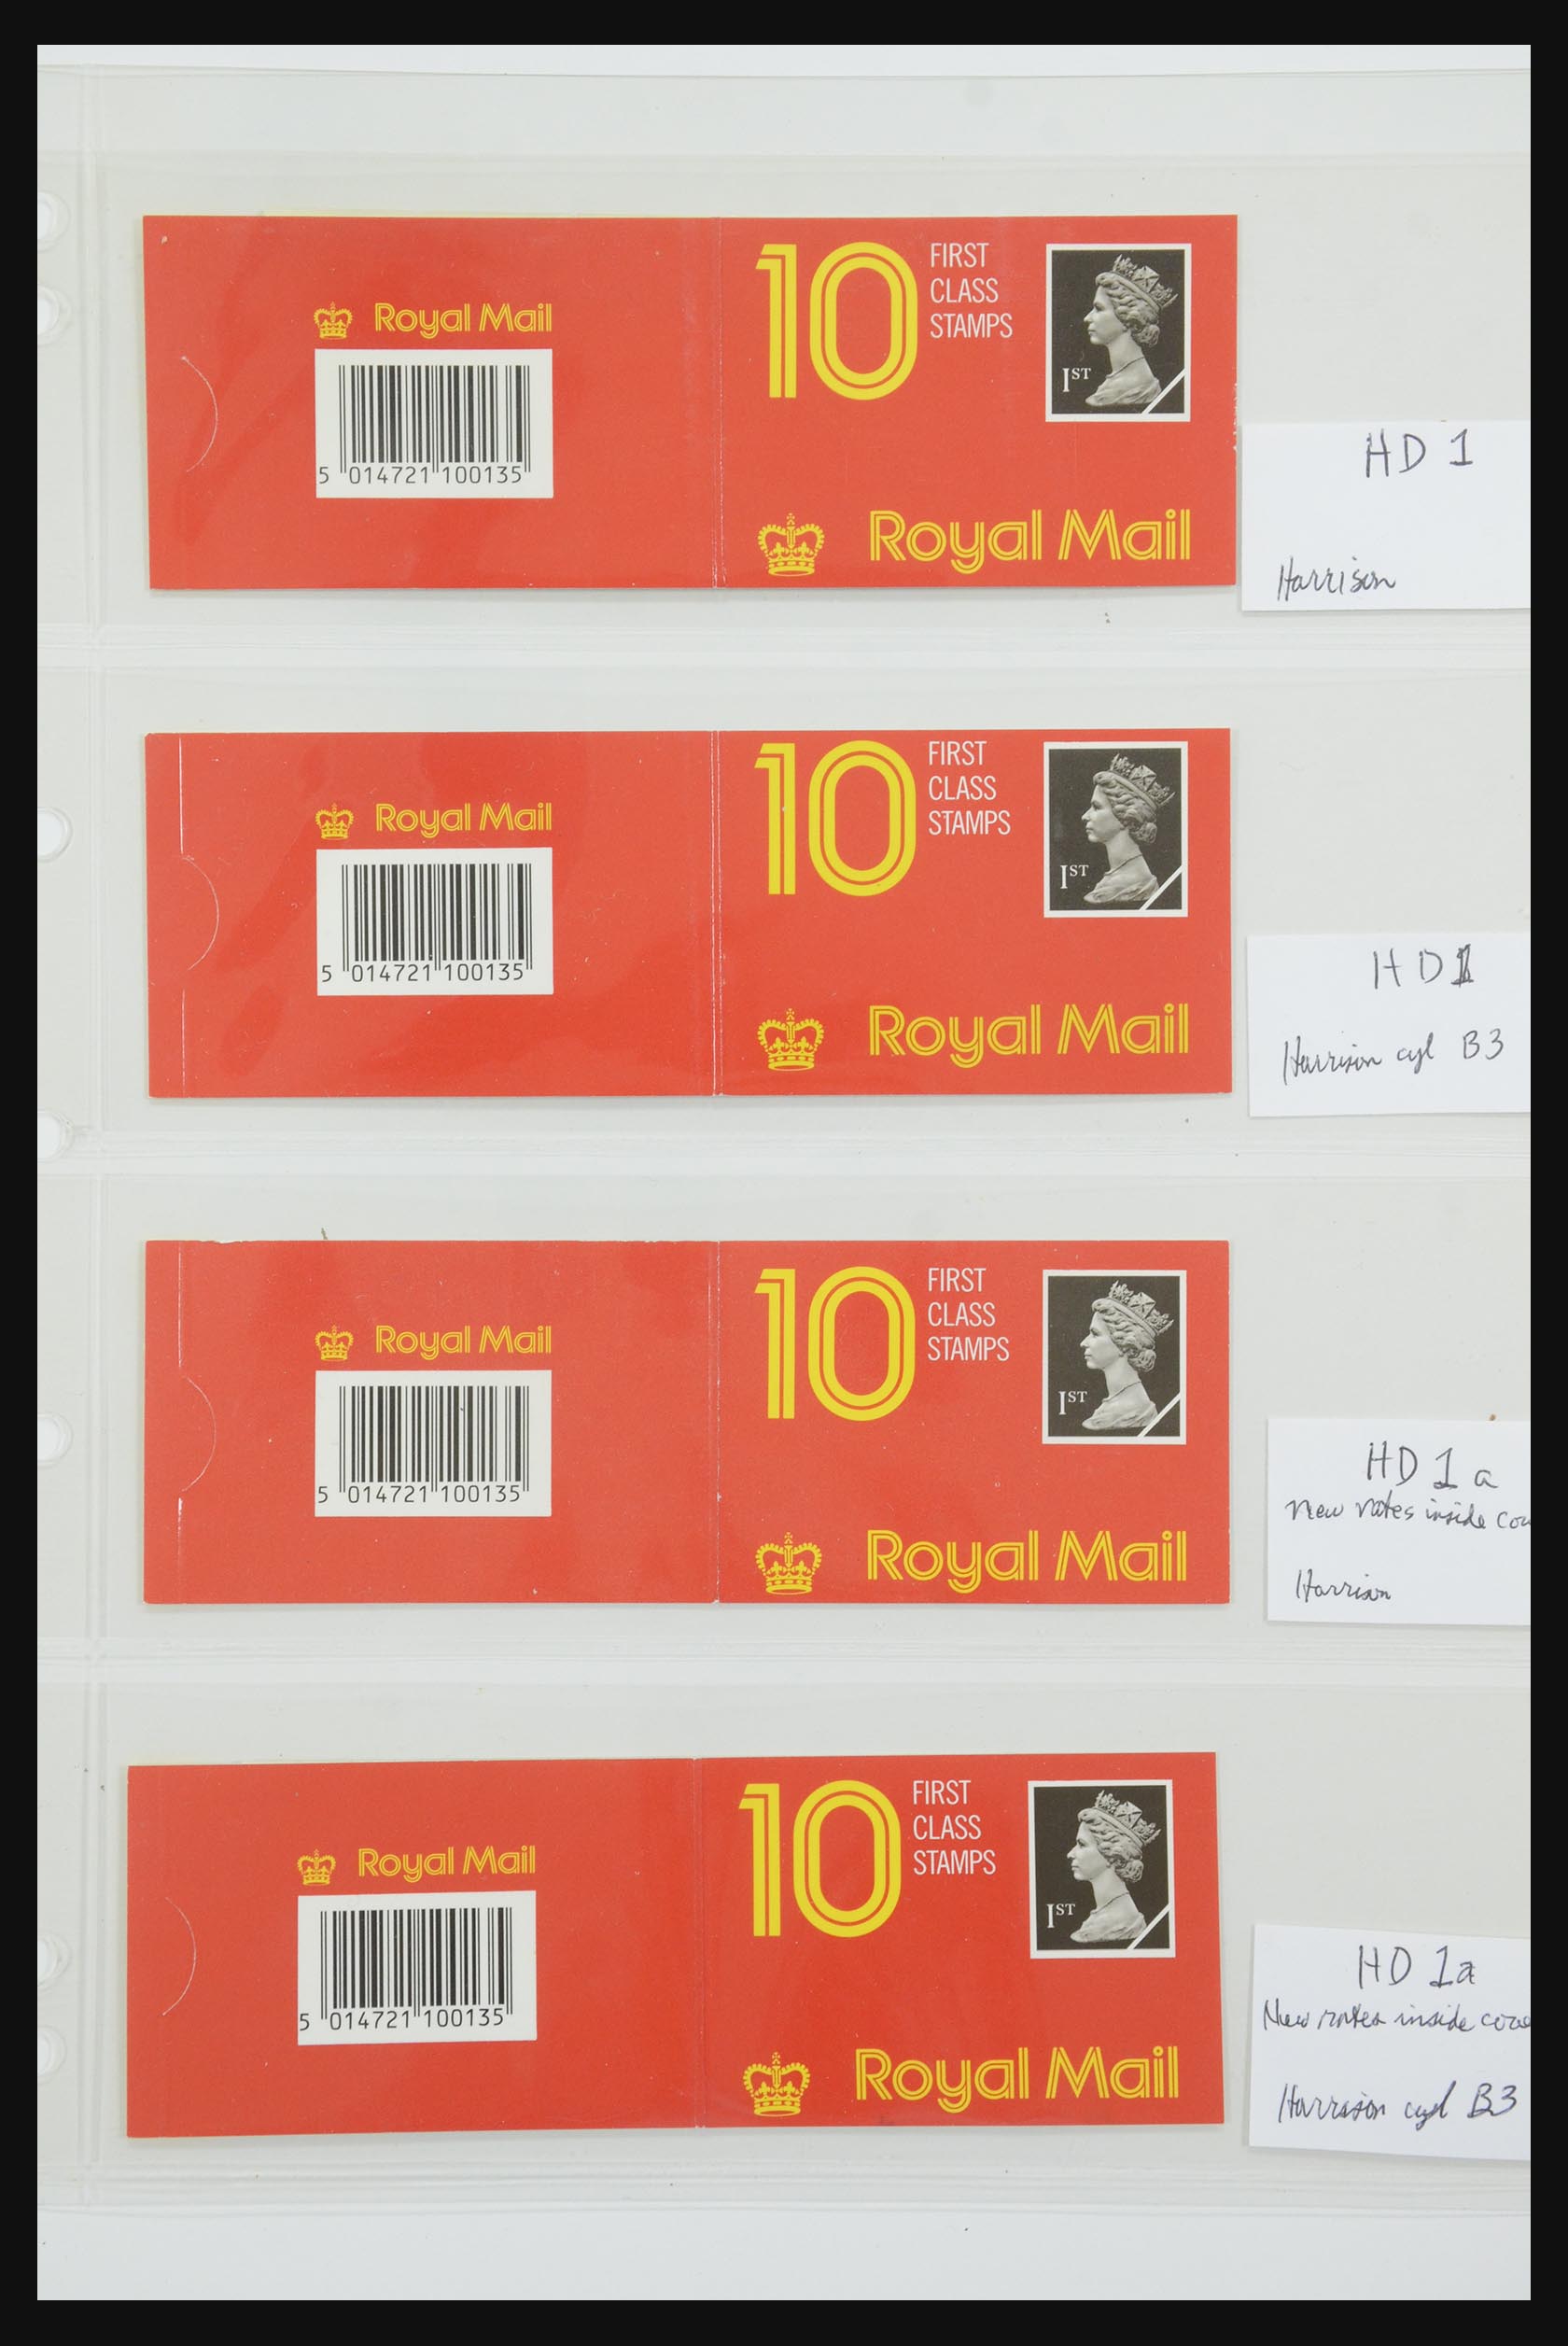 31959 087 - 31959 Great Britain stampbooklets 1987-2016!!